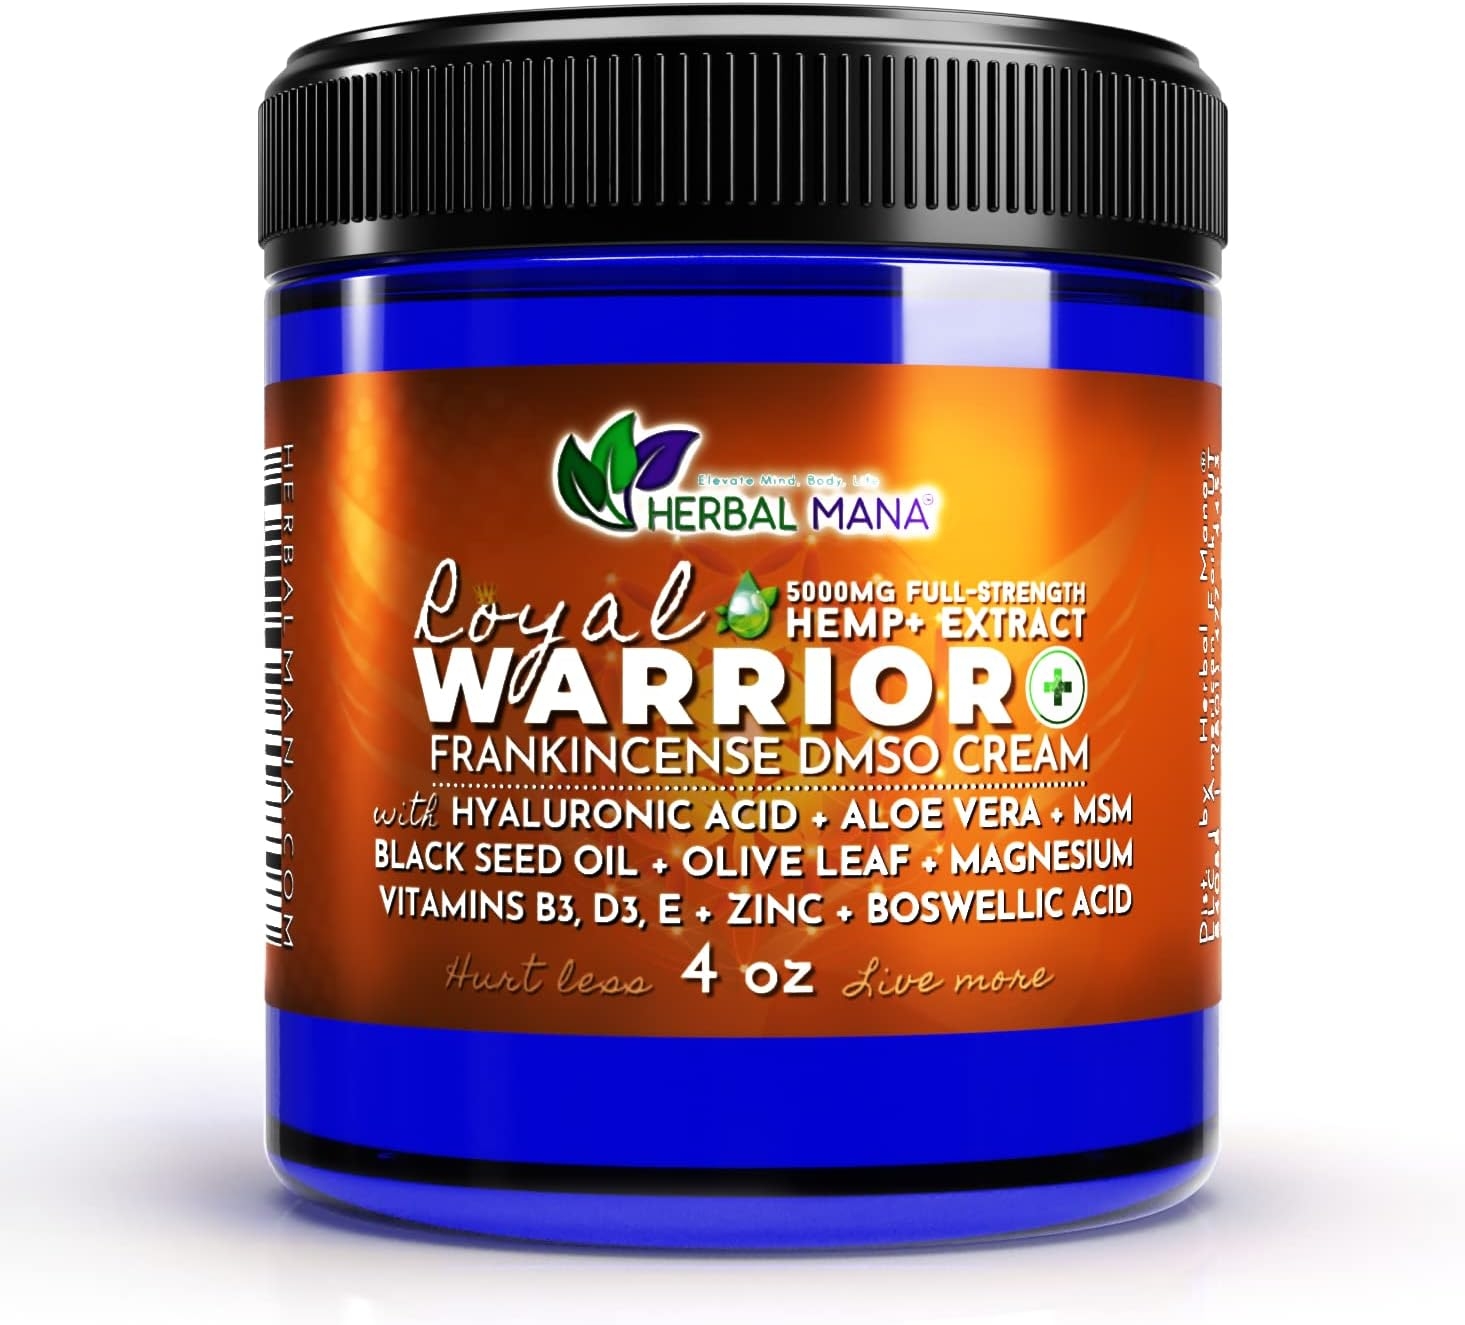 Herbal Mana Royal Warrior | Frankincense DMSO Cream with Hemp (5000mg) | 99.995% Pure Pharma DMSO, Hyaluronic Acid, Black Seed Oil, Organic Aloe Vera, MSM, Magnesium, Zinc + Vitamins B3, D3, E | 4 oz